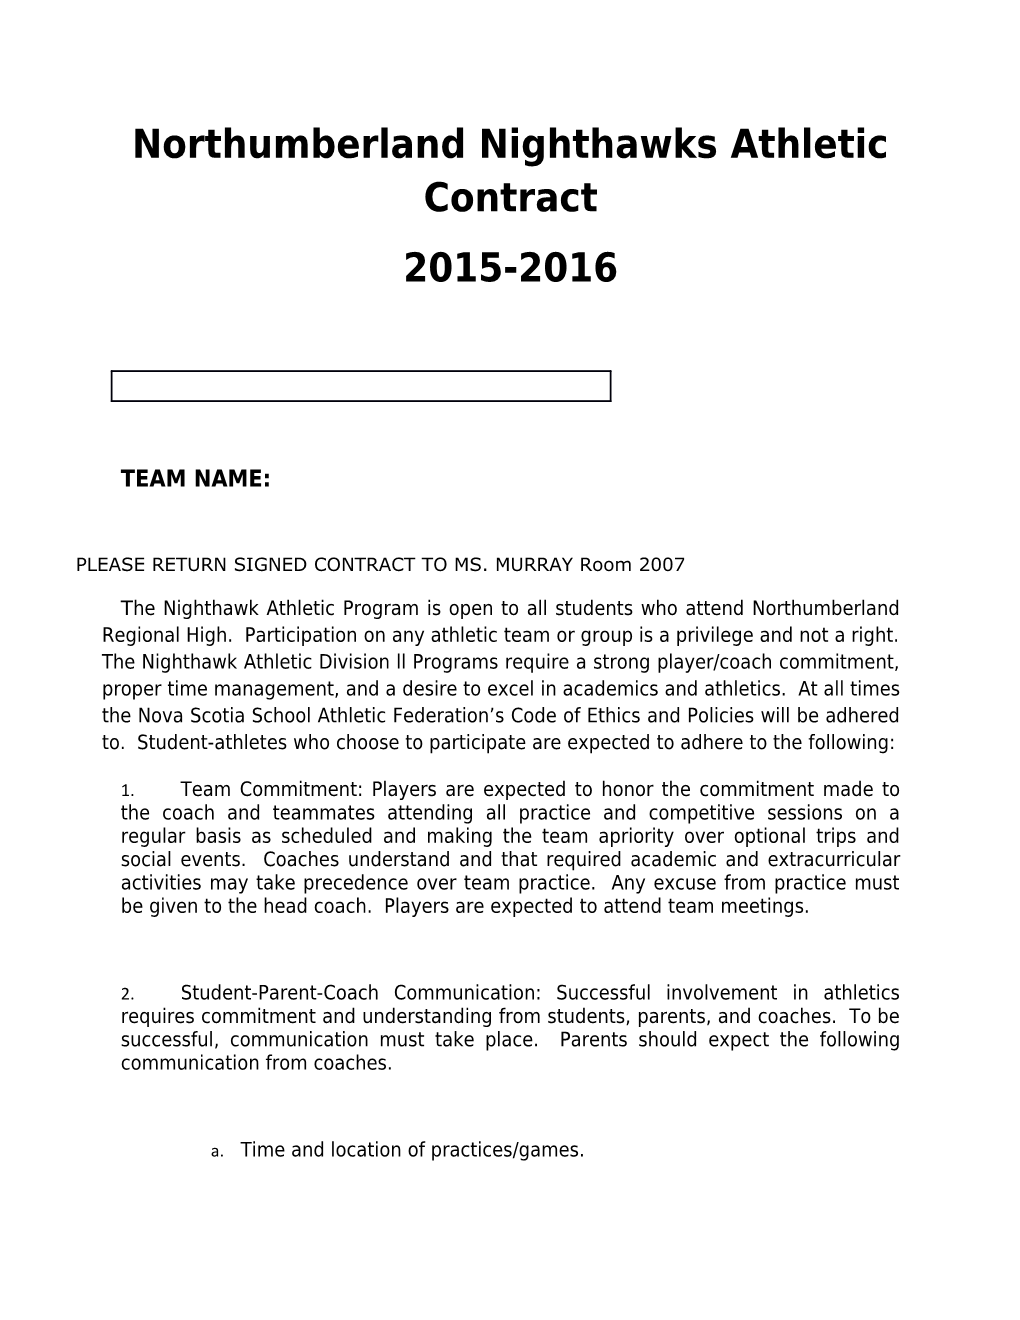 Northumberland Nighthawks Athletic Contract